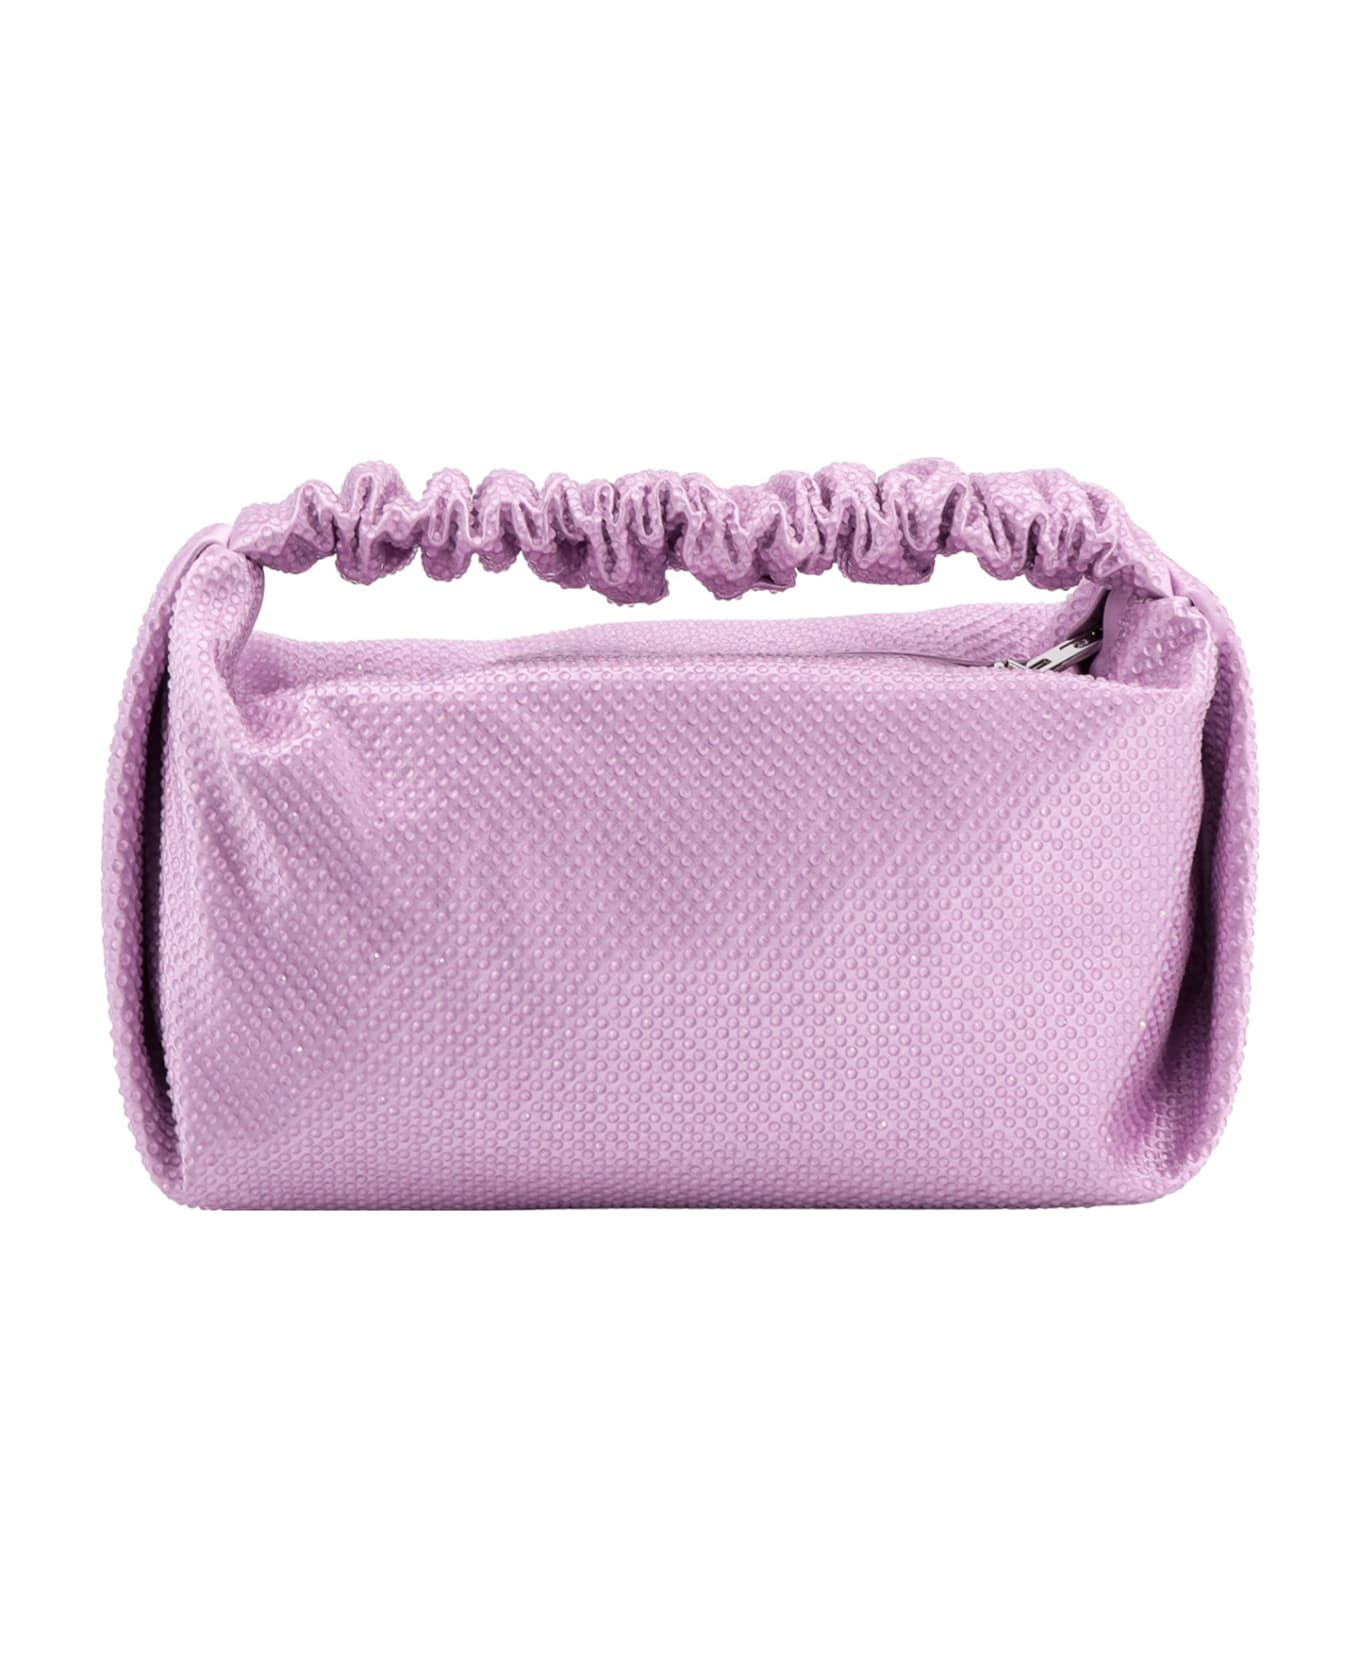 Alexander Wang Scrunchie Handbag - Purple